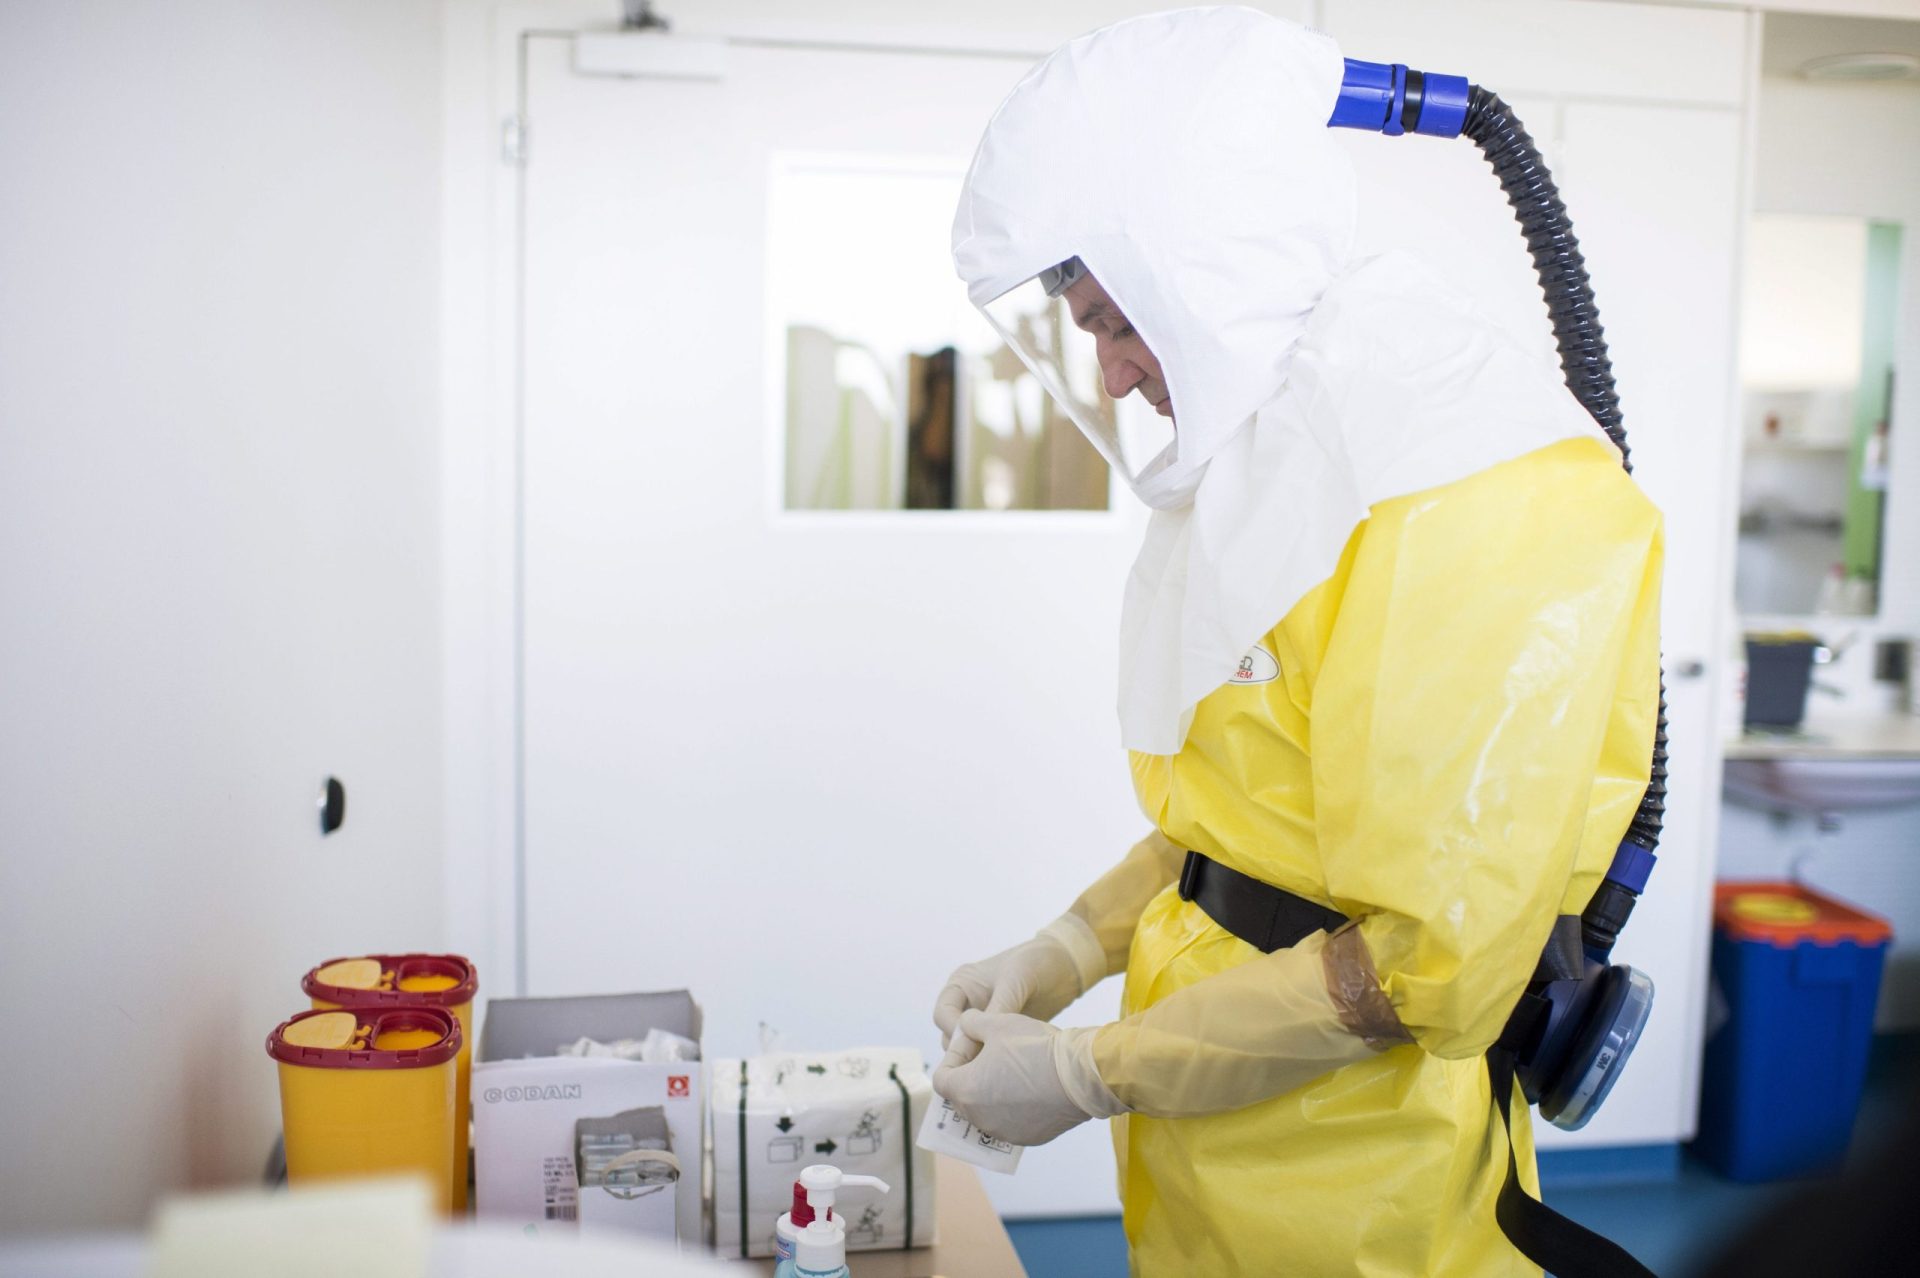 Auxiliar espanhola com carga viral de ébola &#8216;quase negativa&#8217;